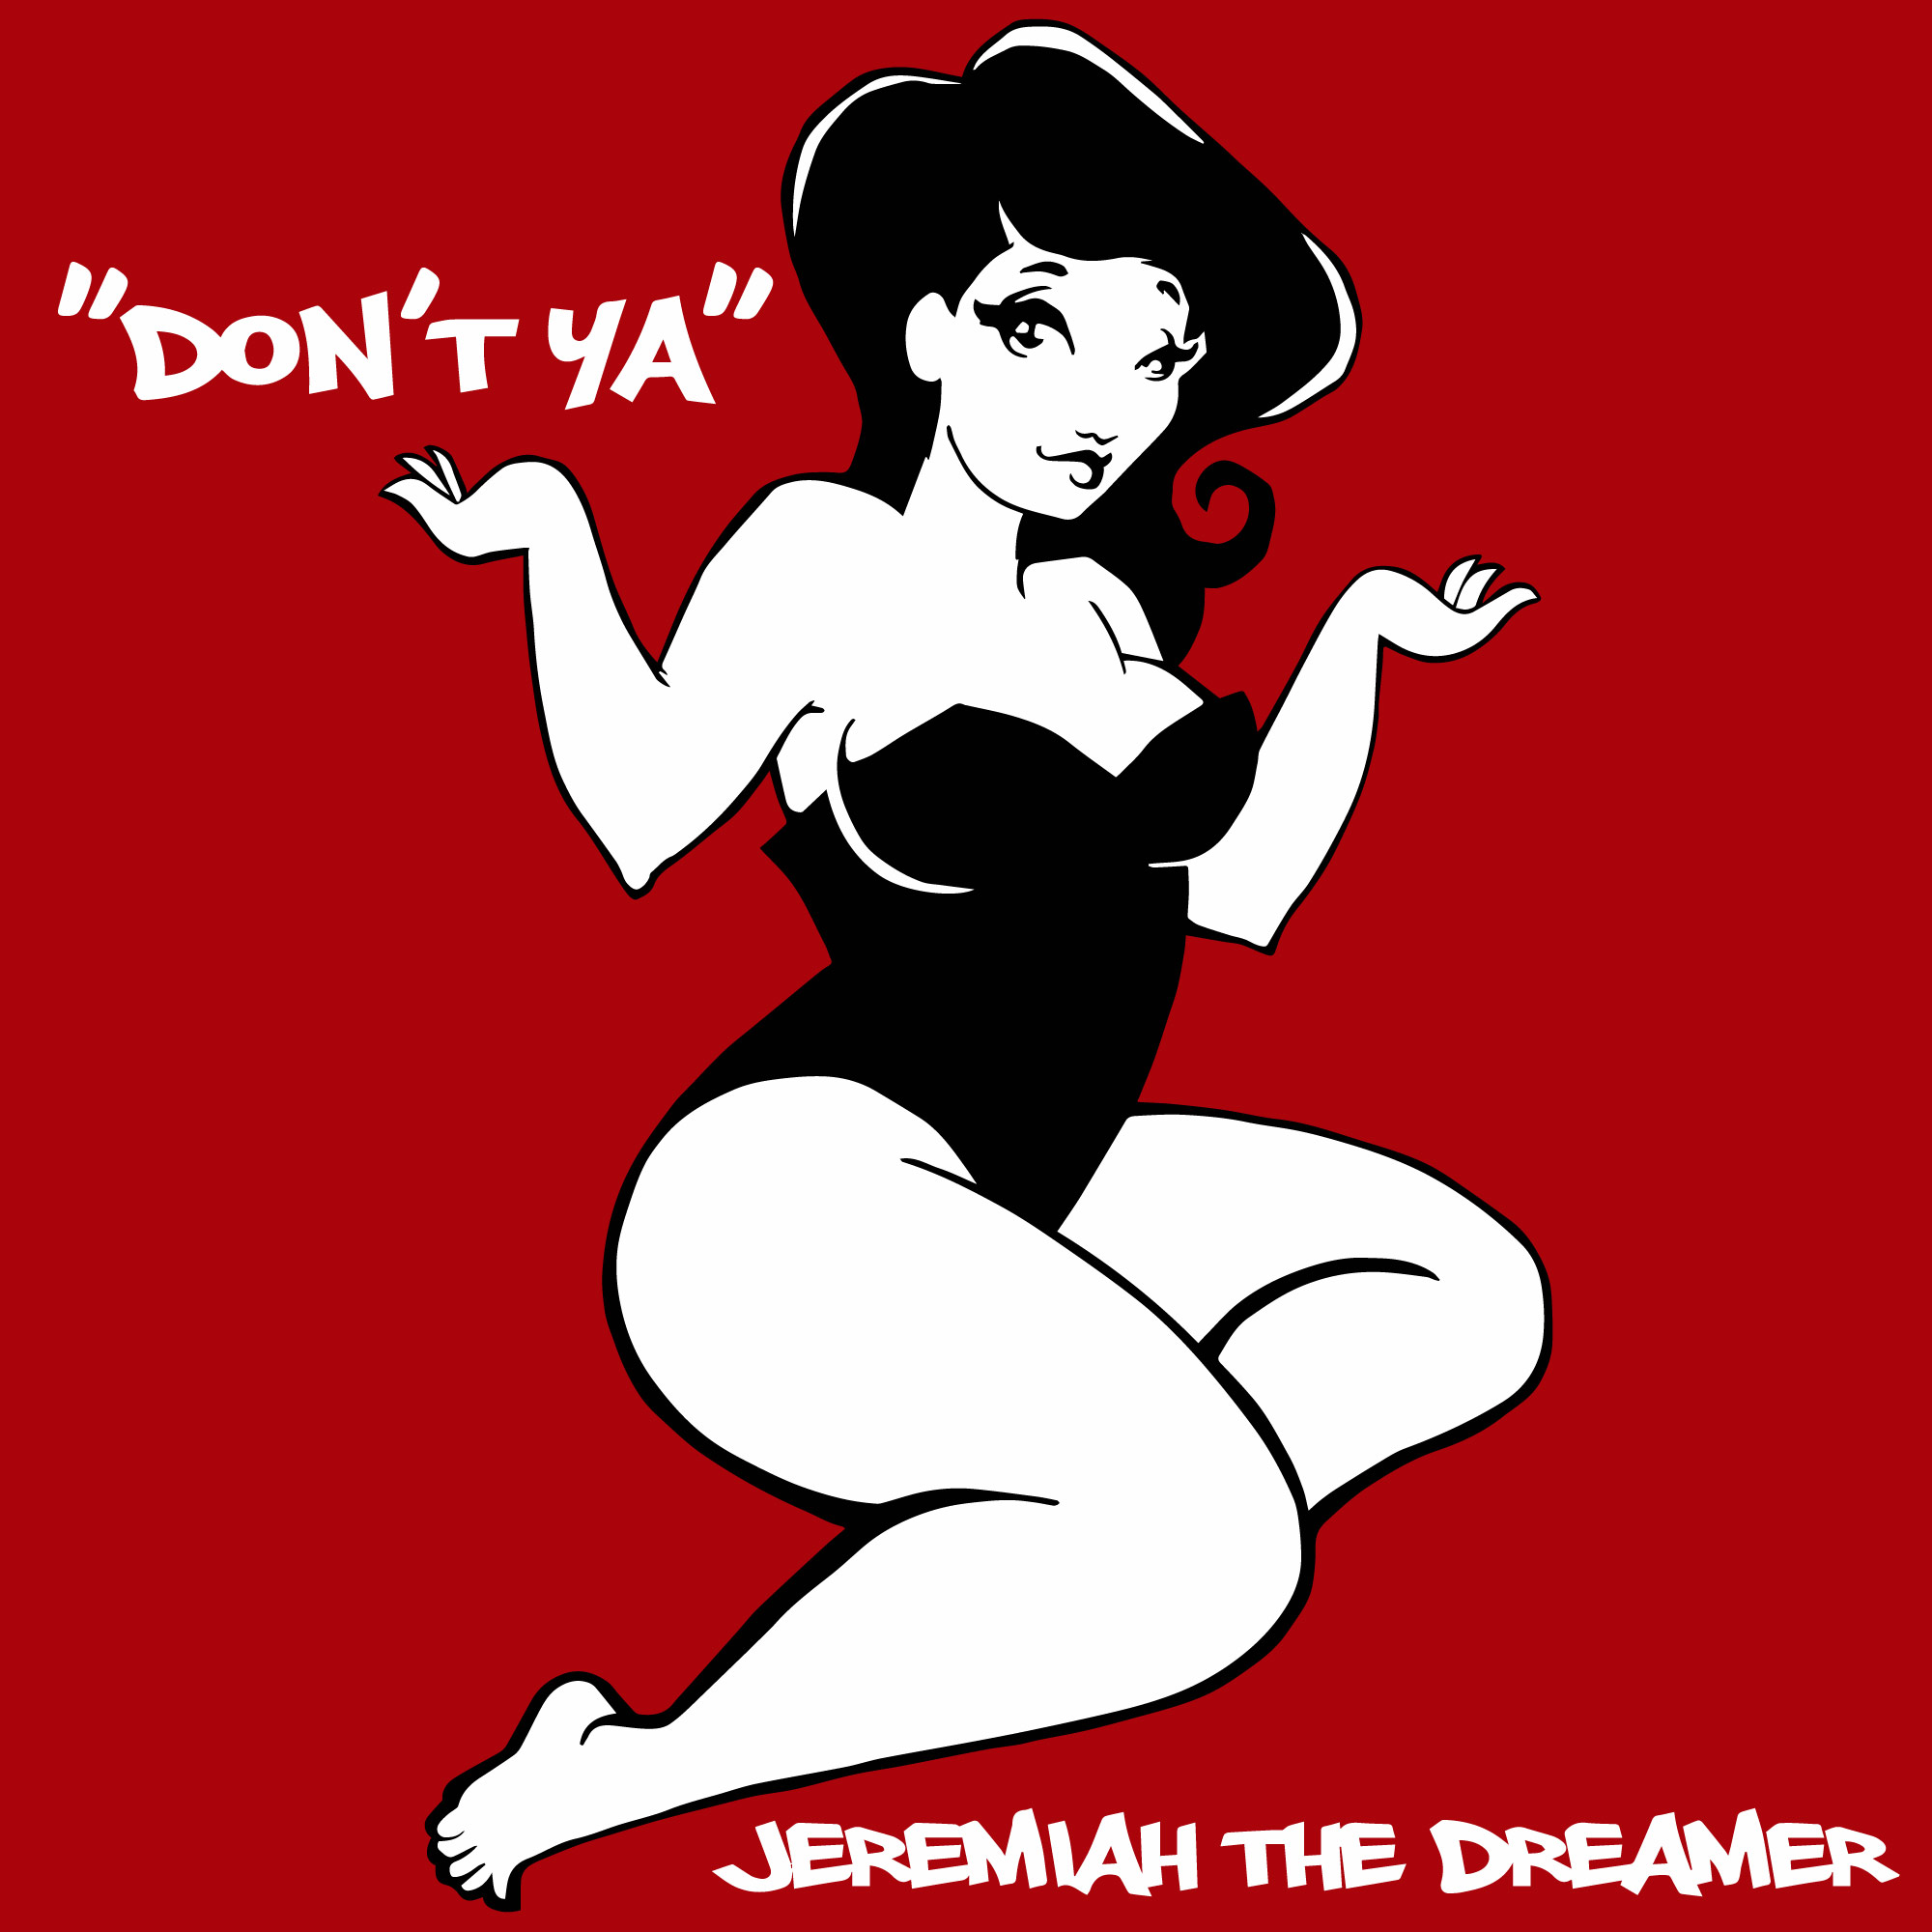 "Don't Ya" by Jeremiah the Dreamer